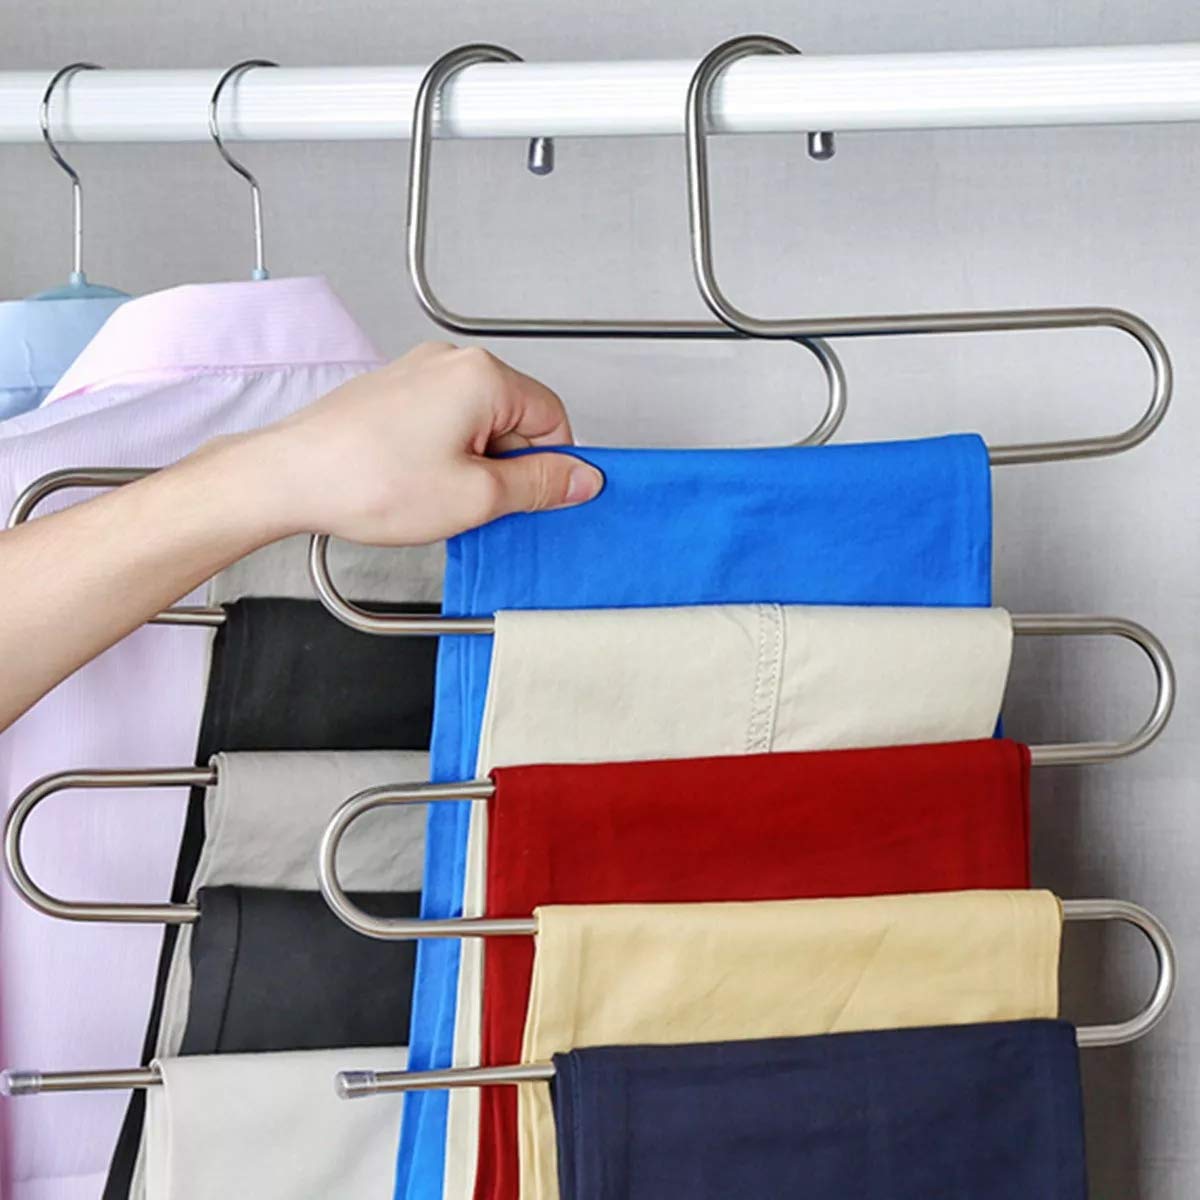 Pants Trousers Organizer Hanging Clothes Rack Hanger Layers Clothing Storage Space Saver Closet Organization